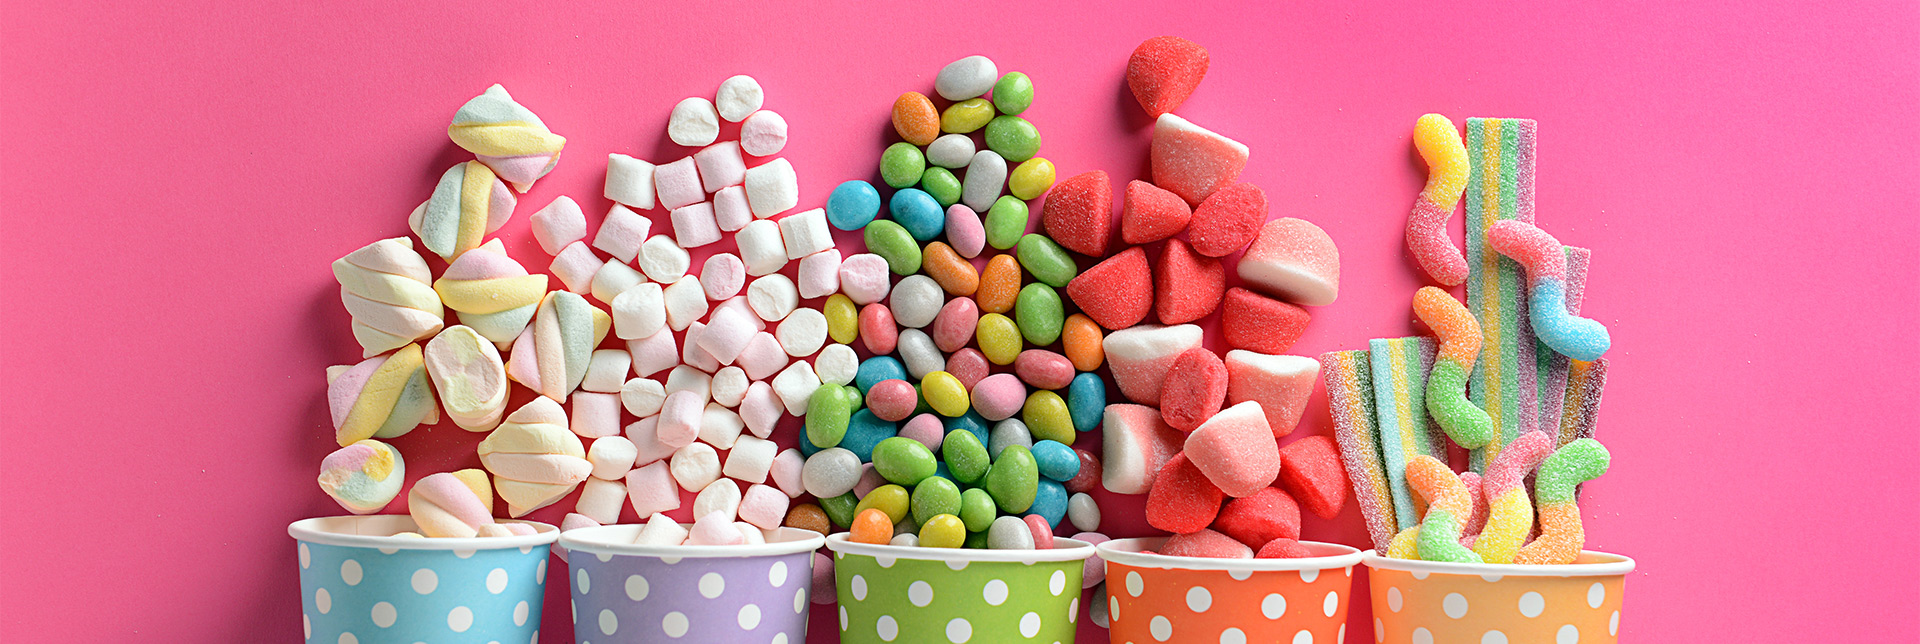 sugars-and-sweeteners-header.jpg